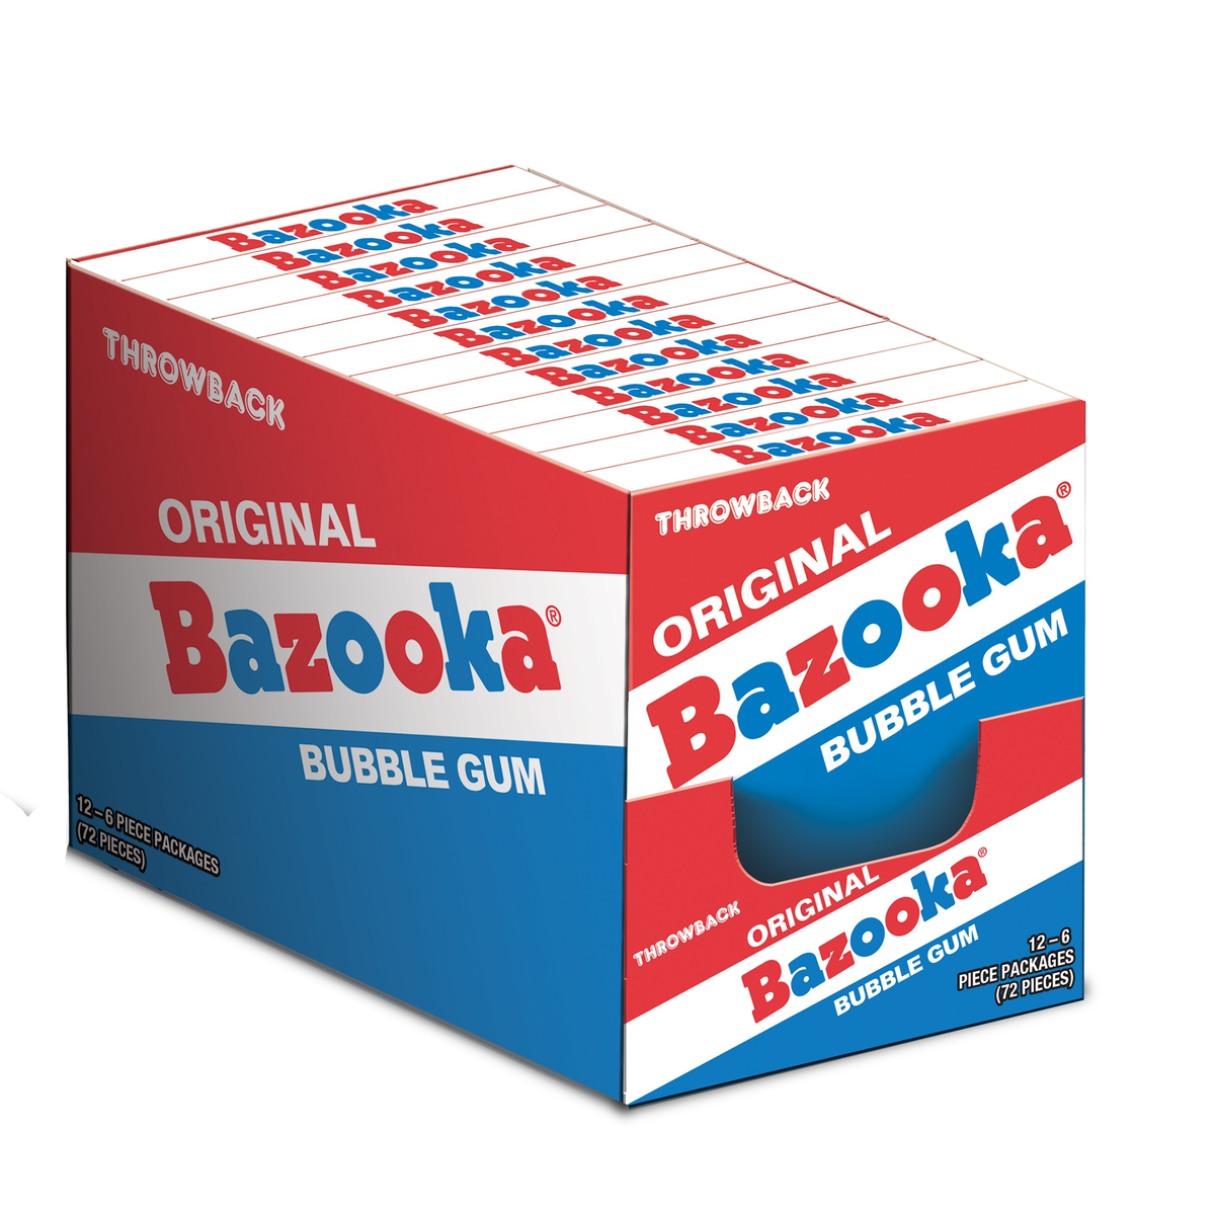 Bazooka "Throw Back" Original 1.27oz - 12ct